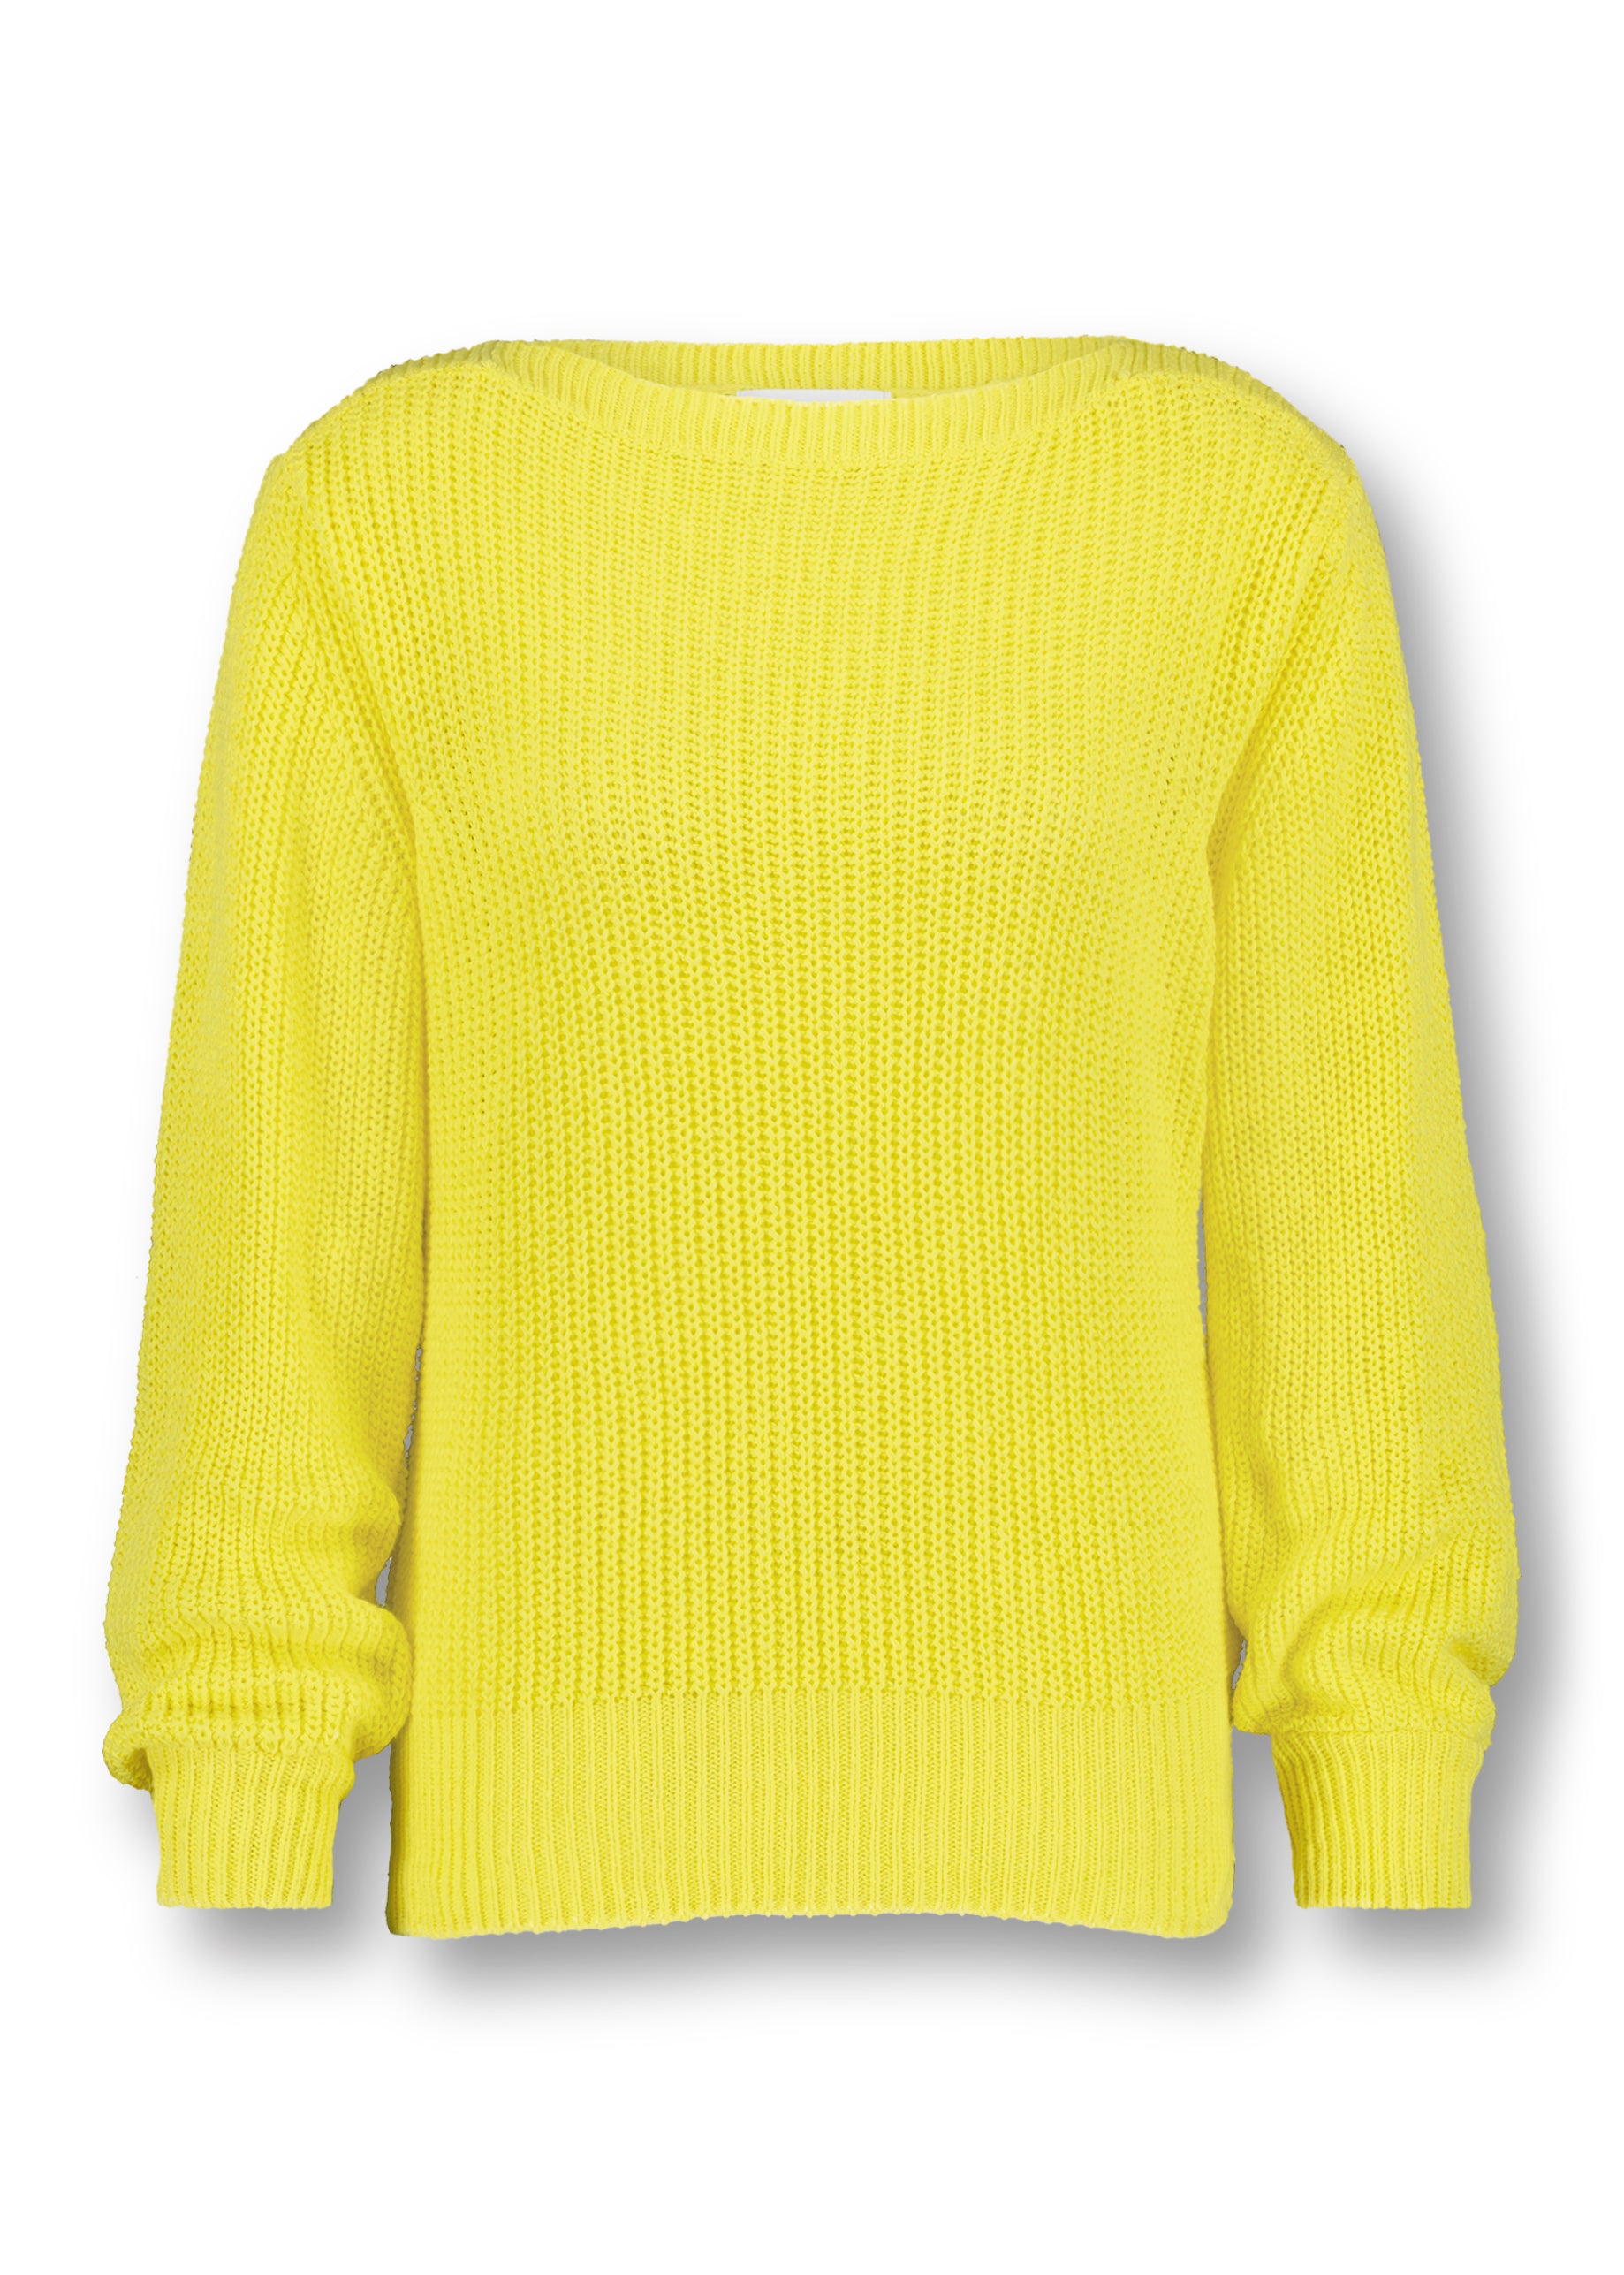 Solis Sweater - Yellow - Packshot - Sweater - Simple